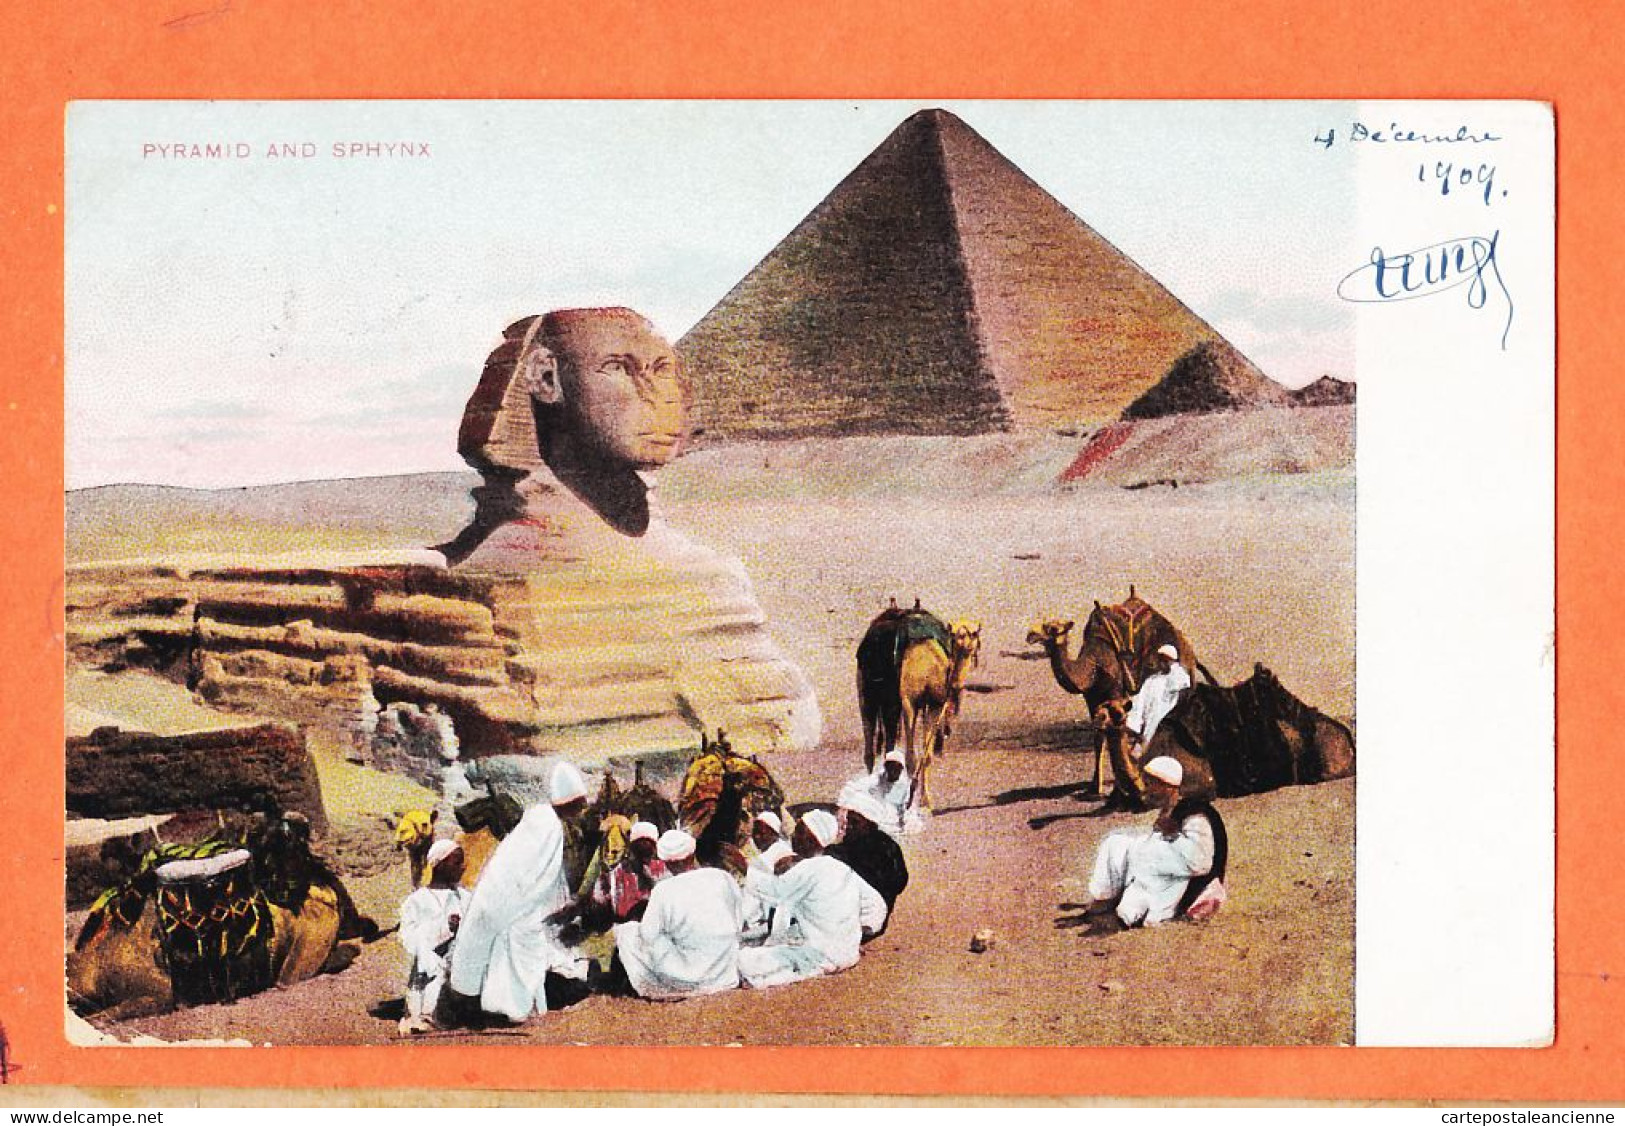 17359 / ⭐ ◉ Lichtenstern & Harari 20 ◉ Pyramid And Sphynx ◉ GIZEH Pyramide Sphinx 1909 à RHEYAL Syndicat Artistes Paris - Gizeh